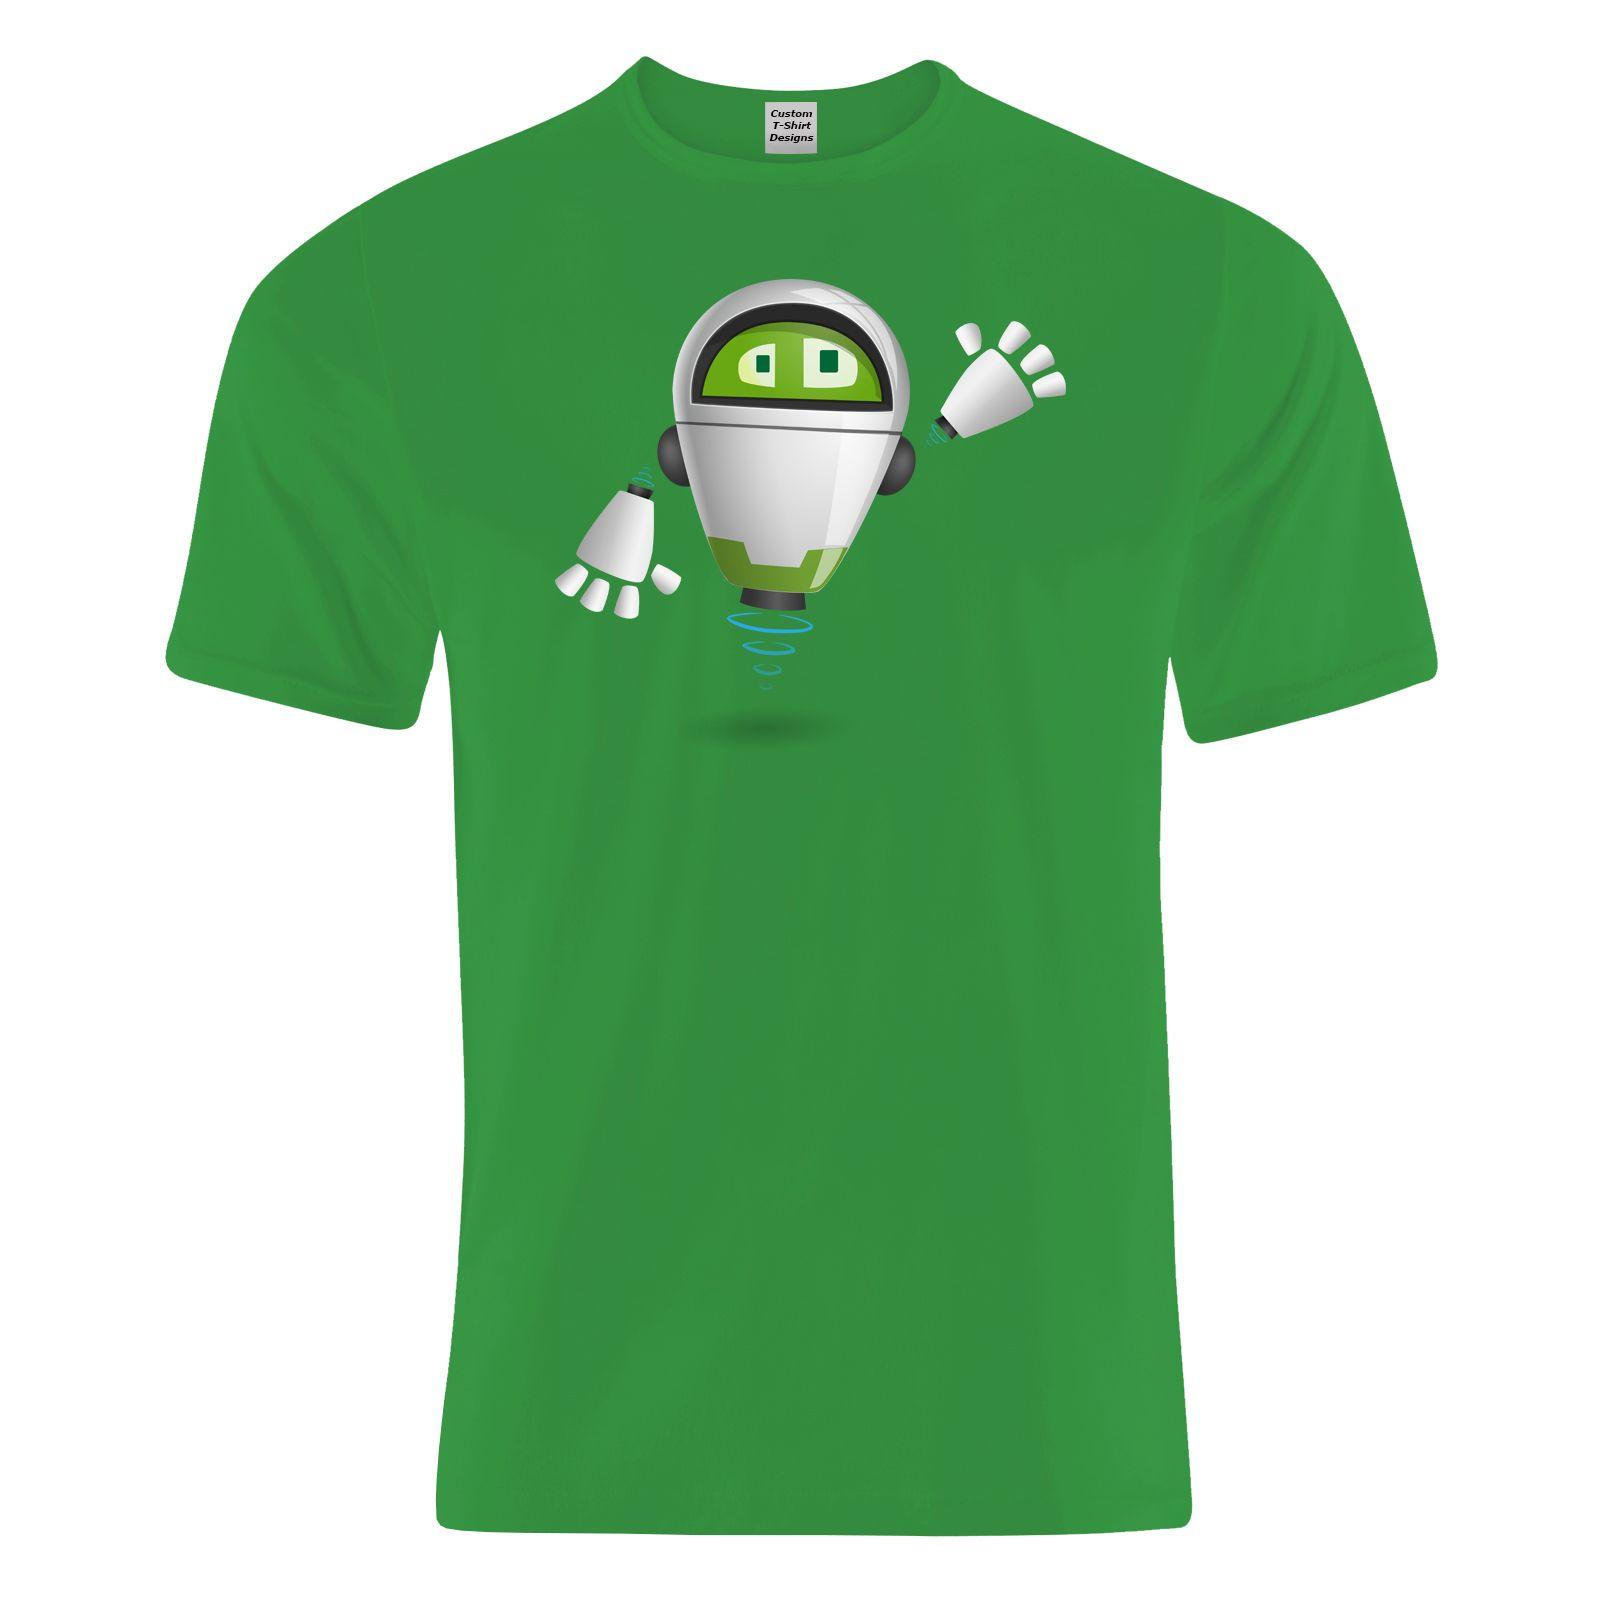 Green Cute Logo - Green Cute Robot Graphic Kids Cotton T-shirt - Custom T-Shirt Designs